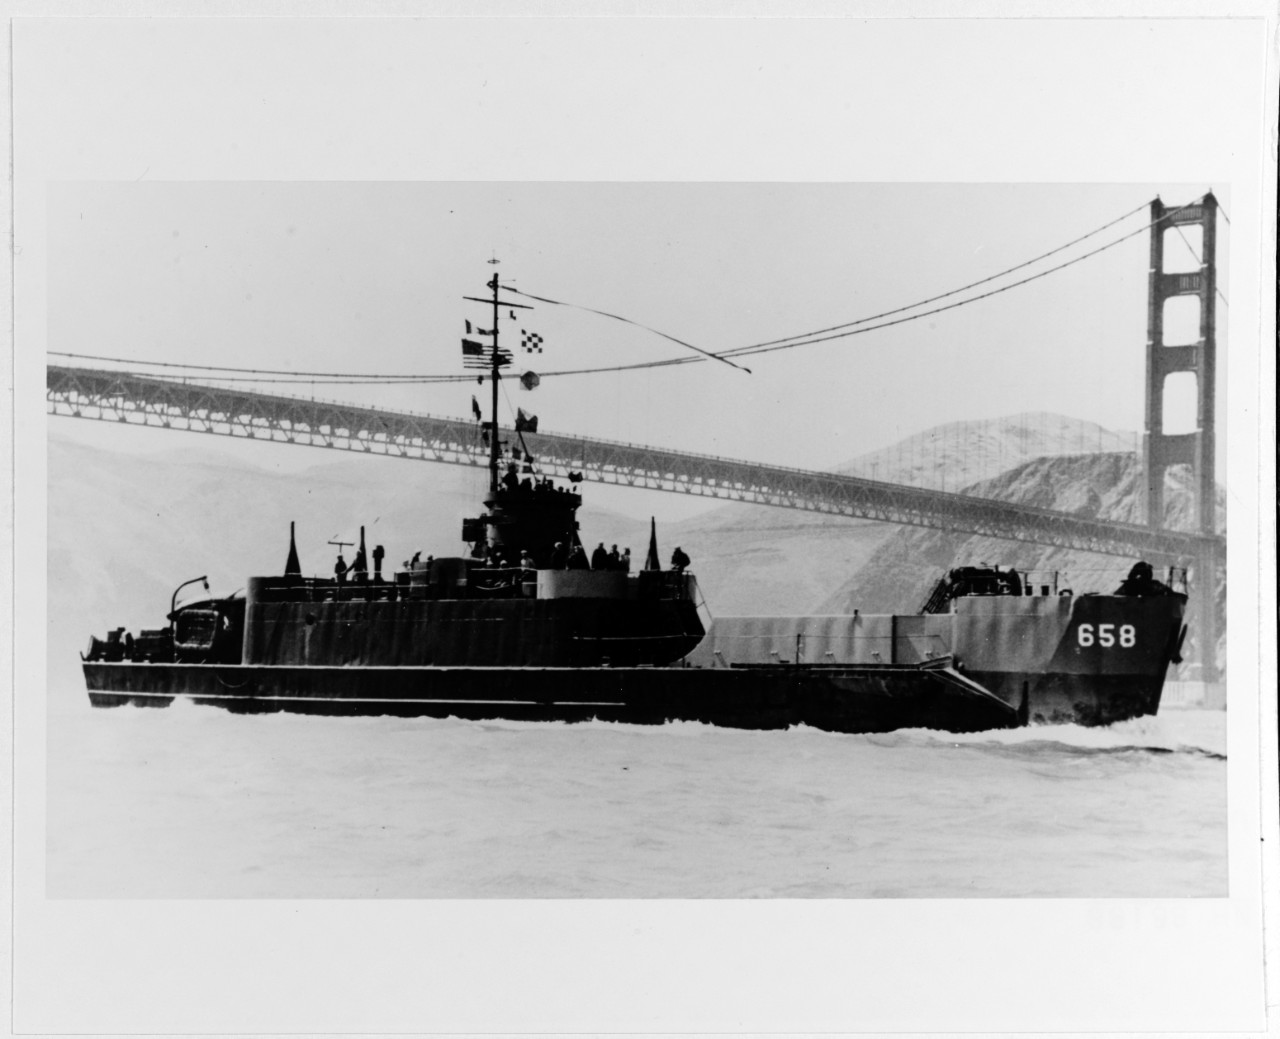 USS LCI-658